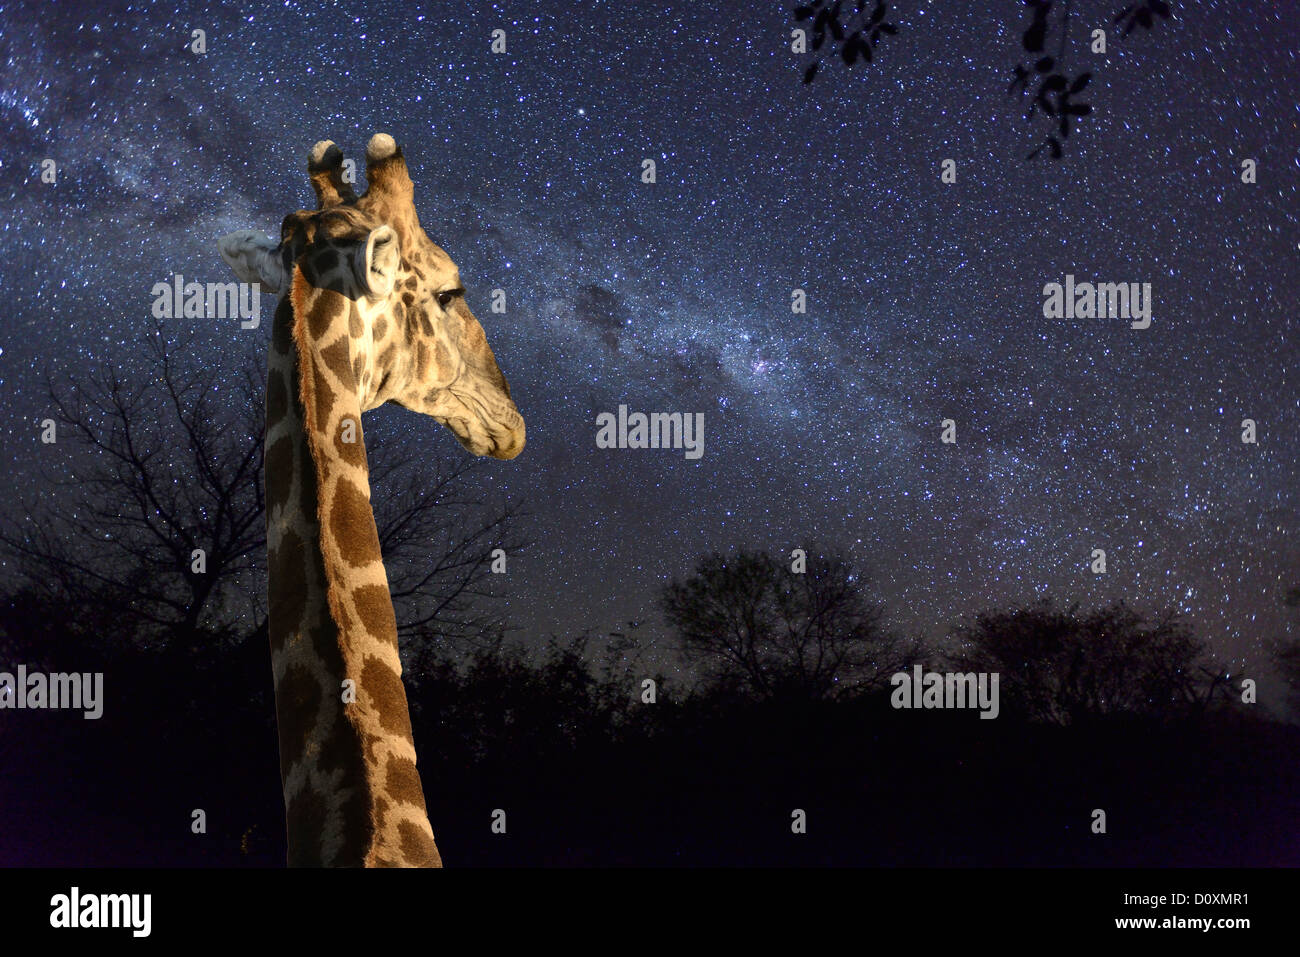 Africa, Sud, Namibiai, notte, sky, stelle, astro, fotografia, costellata di sky, starlit, giraffe, Grootfontein Foto Stock